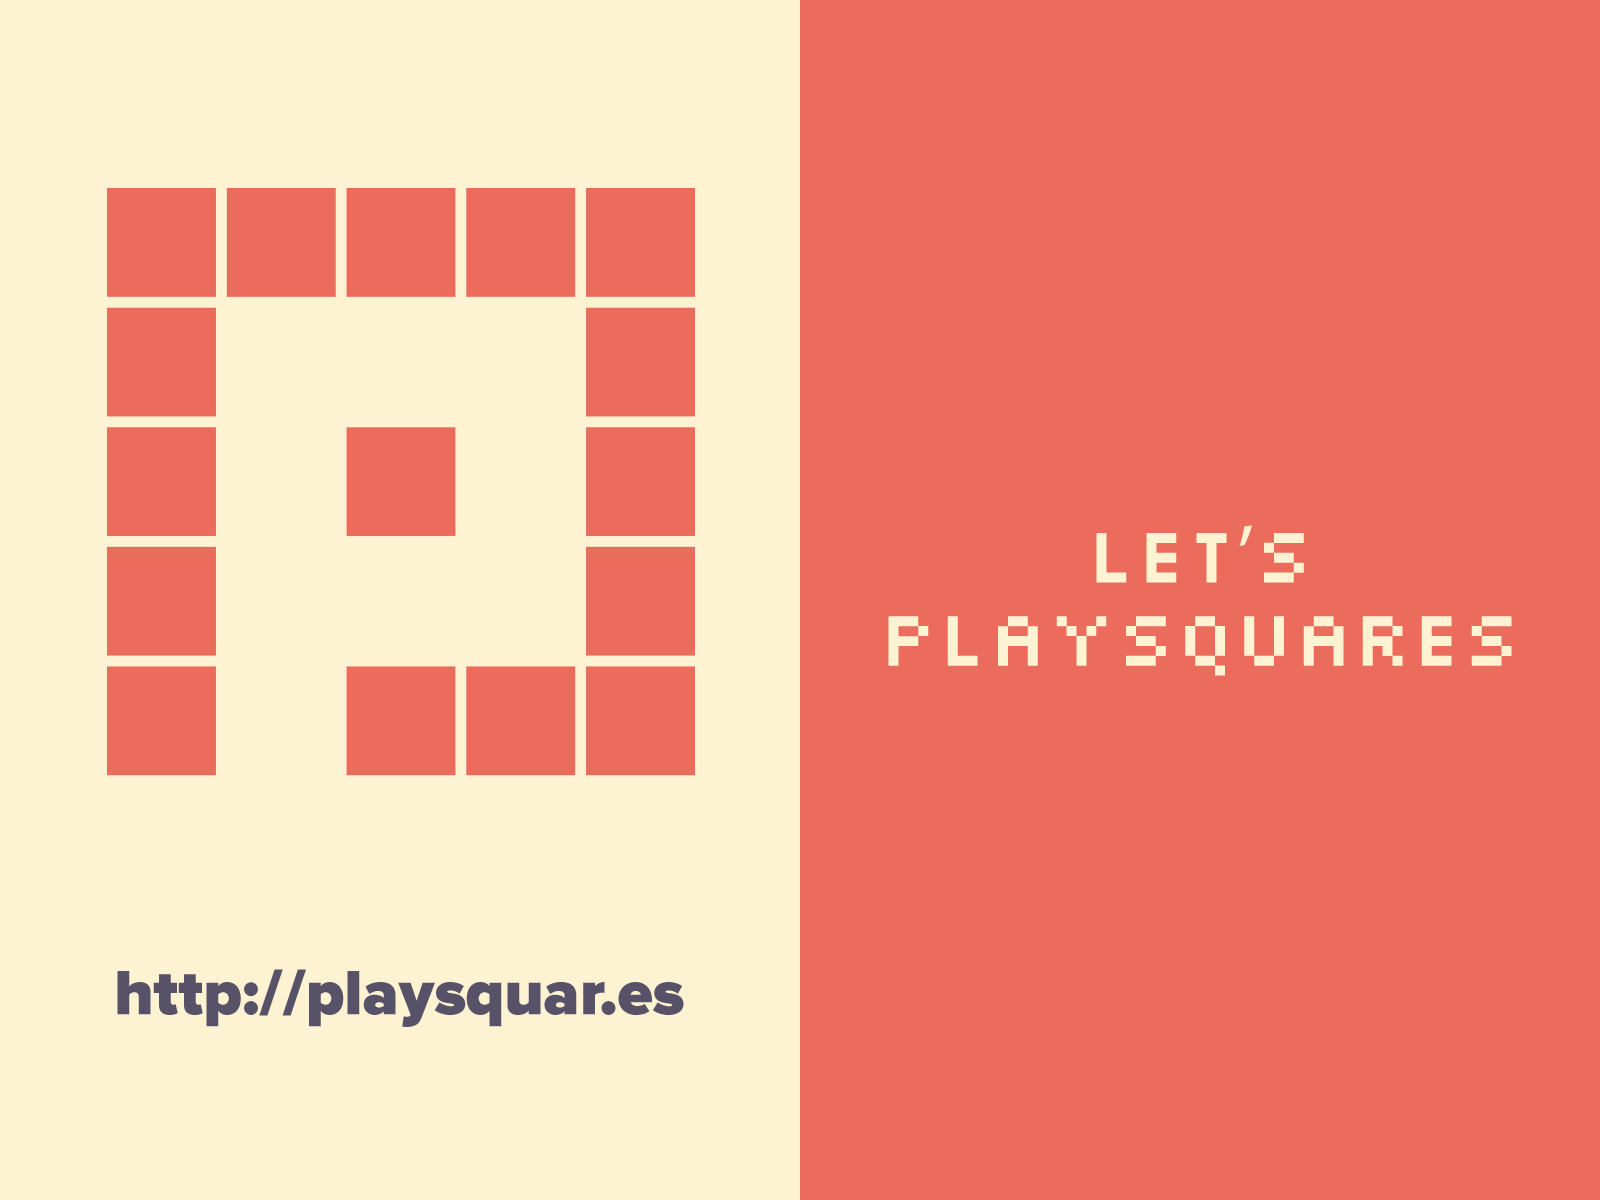 PlaySquares blocks fundraise fundraising pixels squares super bowl